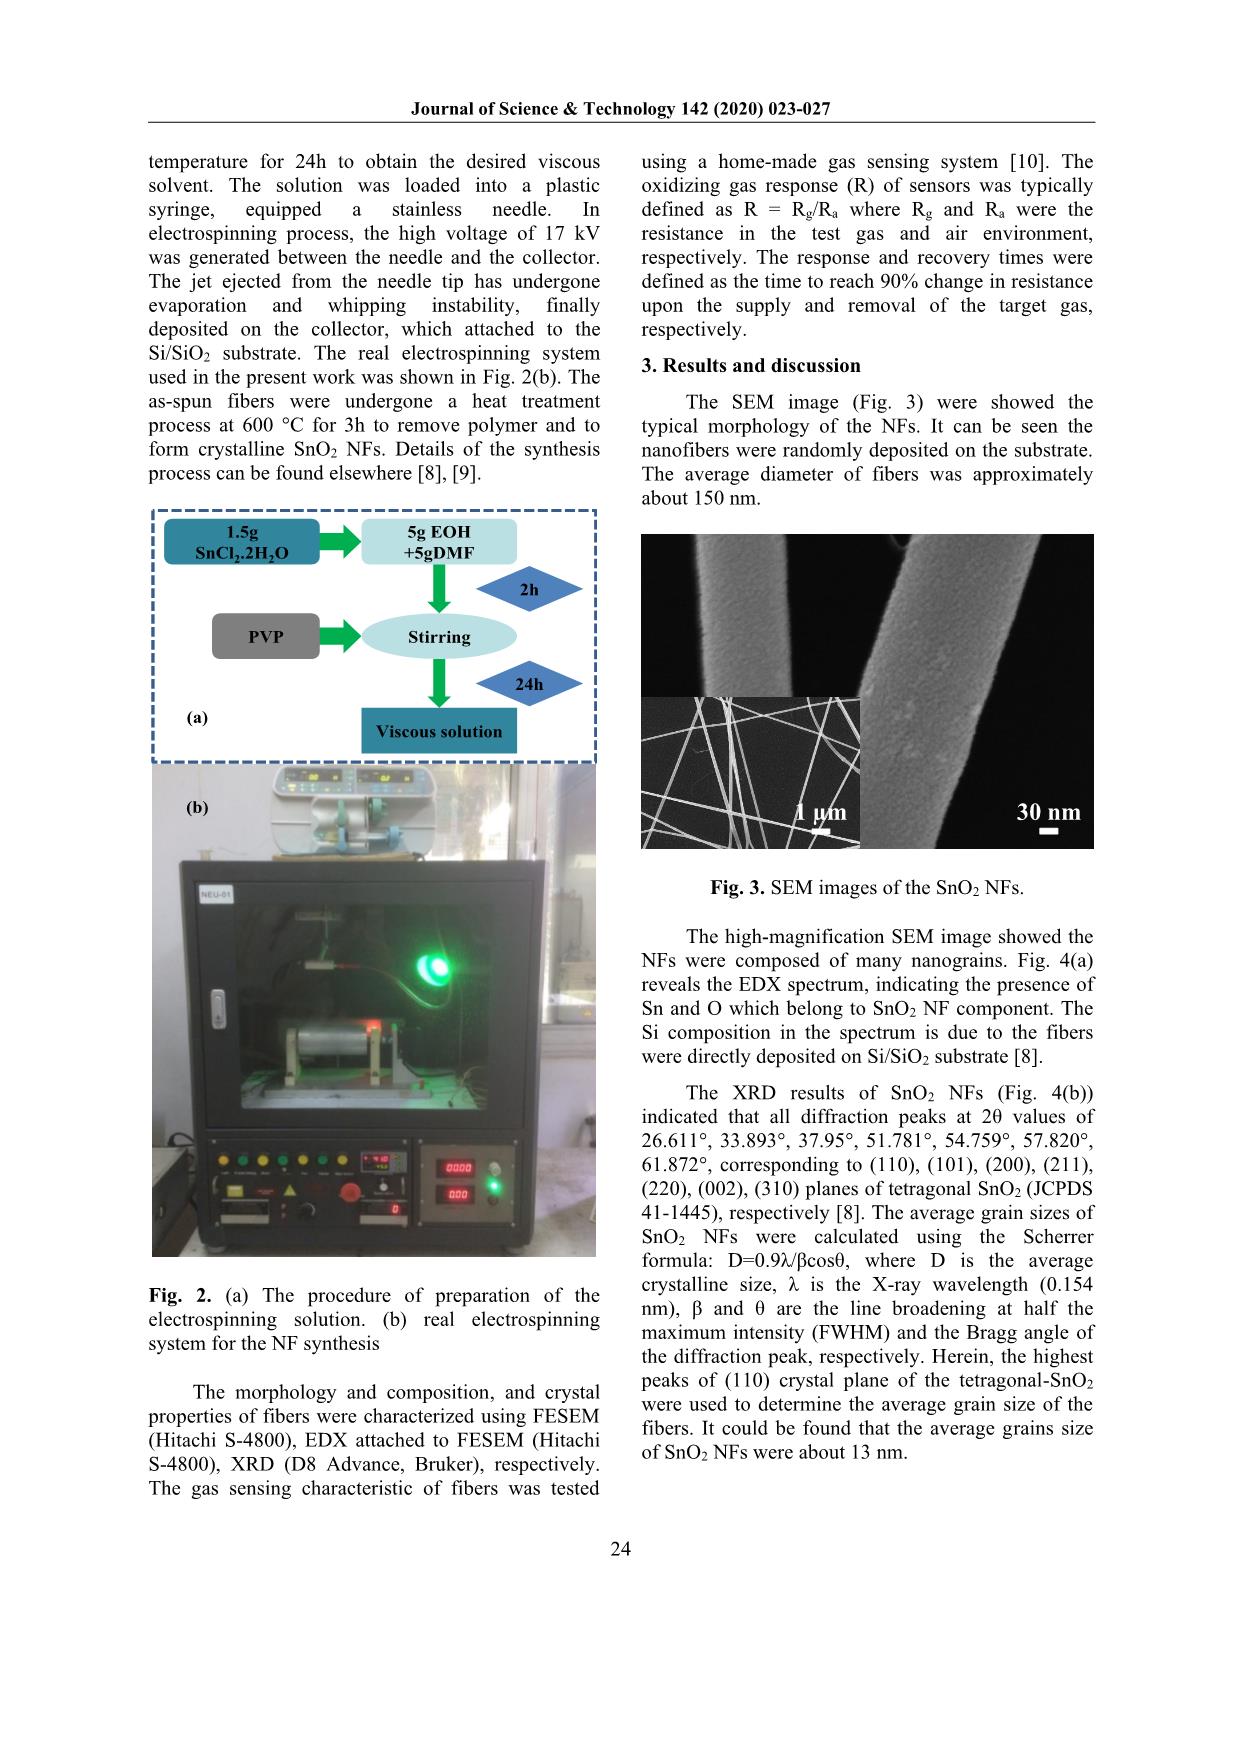 NO2 gas sensing characteristics of SNO2 nanofiber - based sensors trang 2